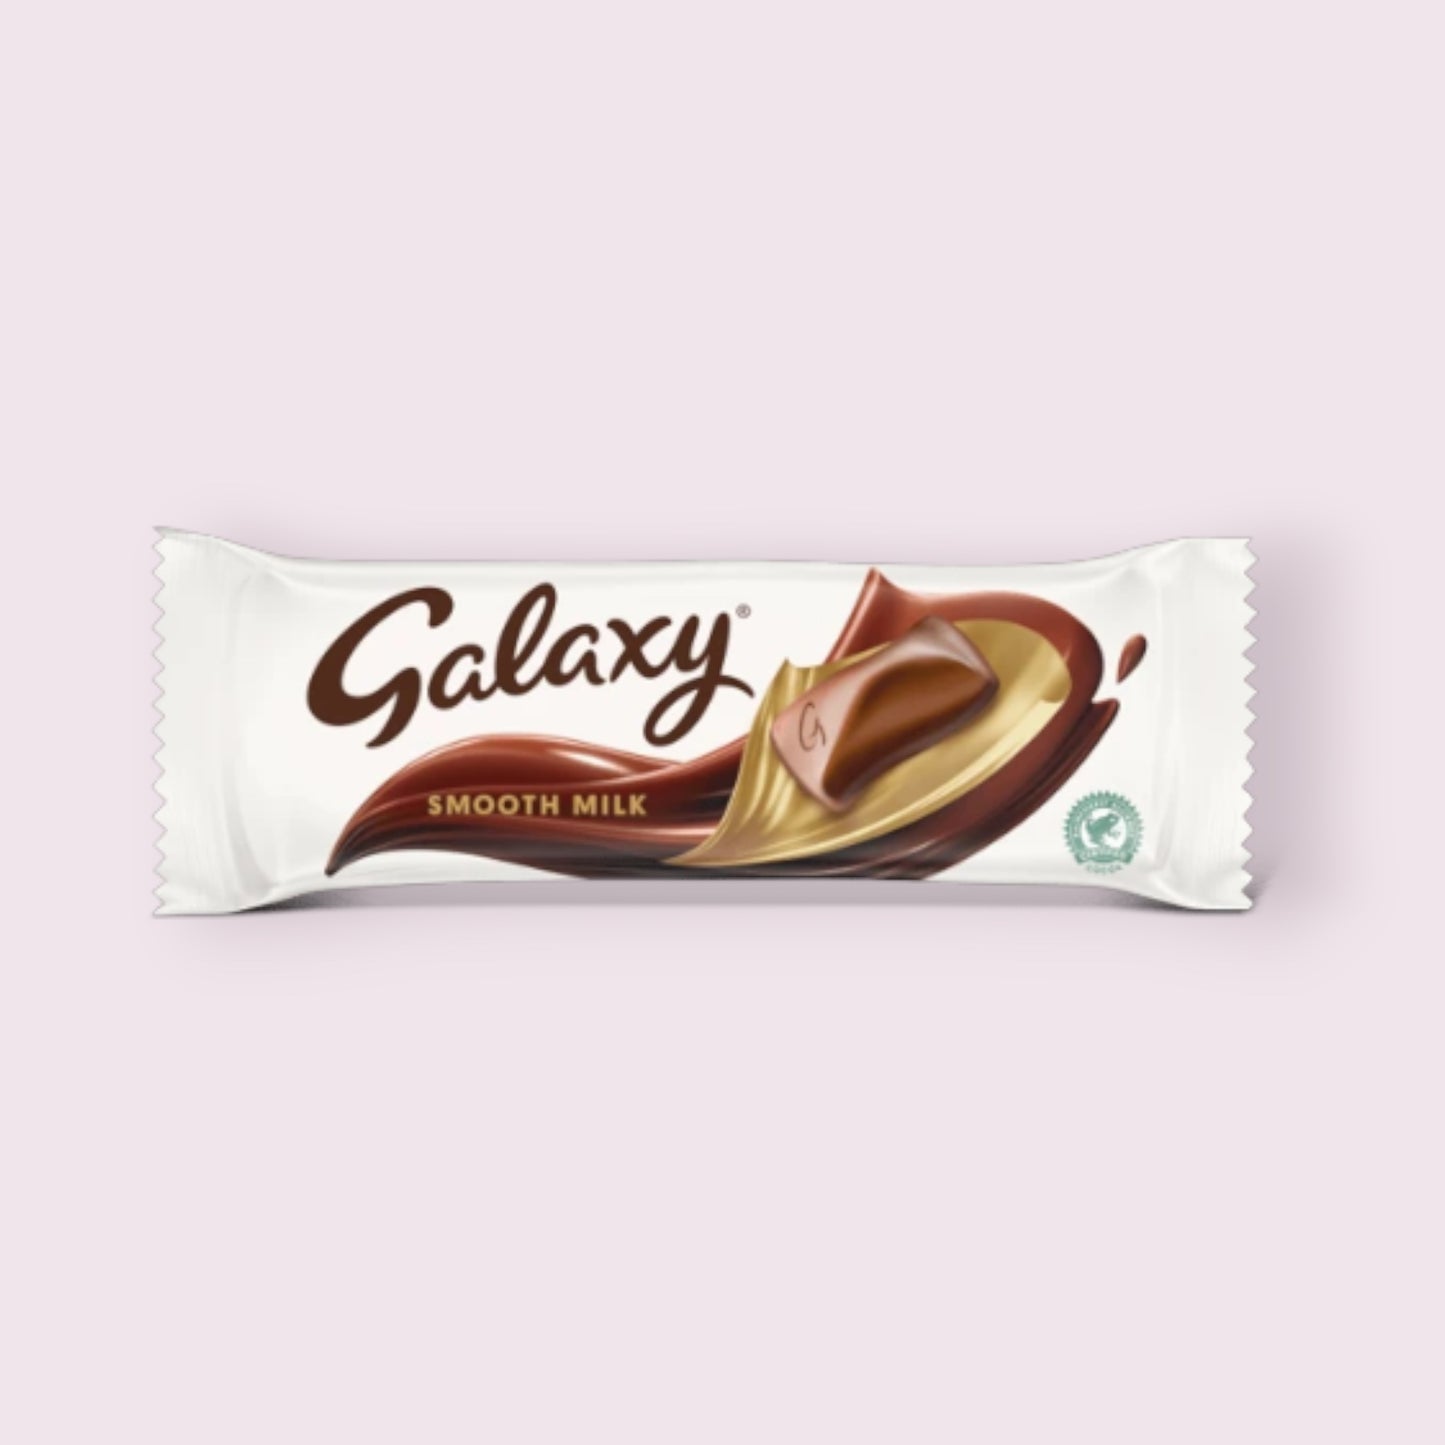 Galaxy Bar Smooth Milk Retro Pixie Candy Shoppe   